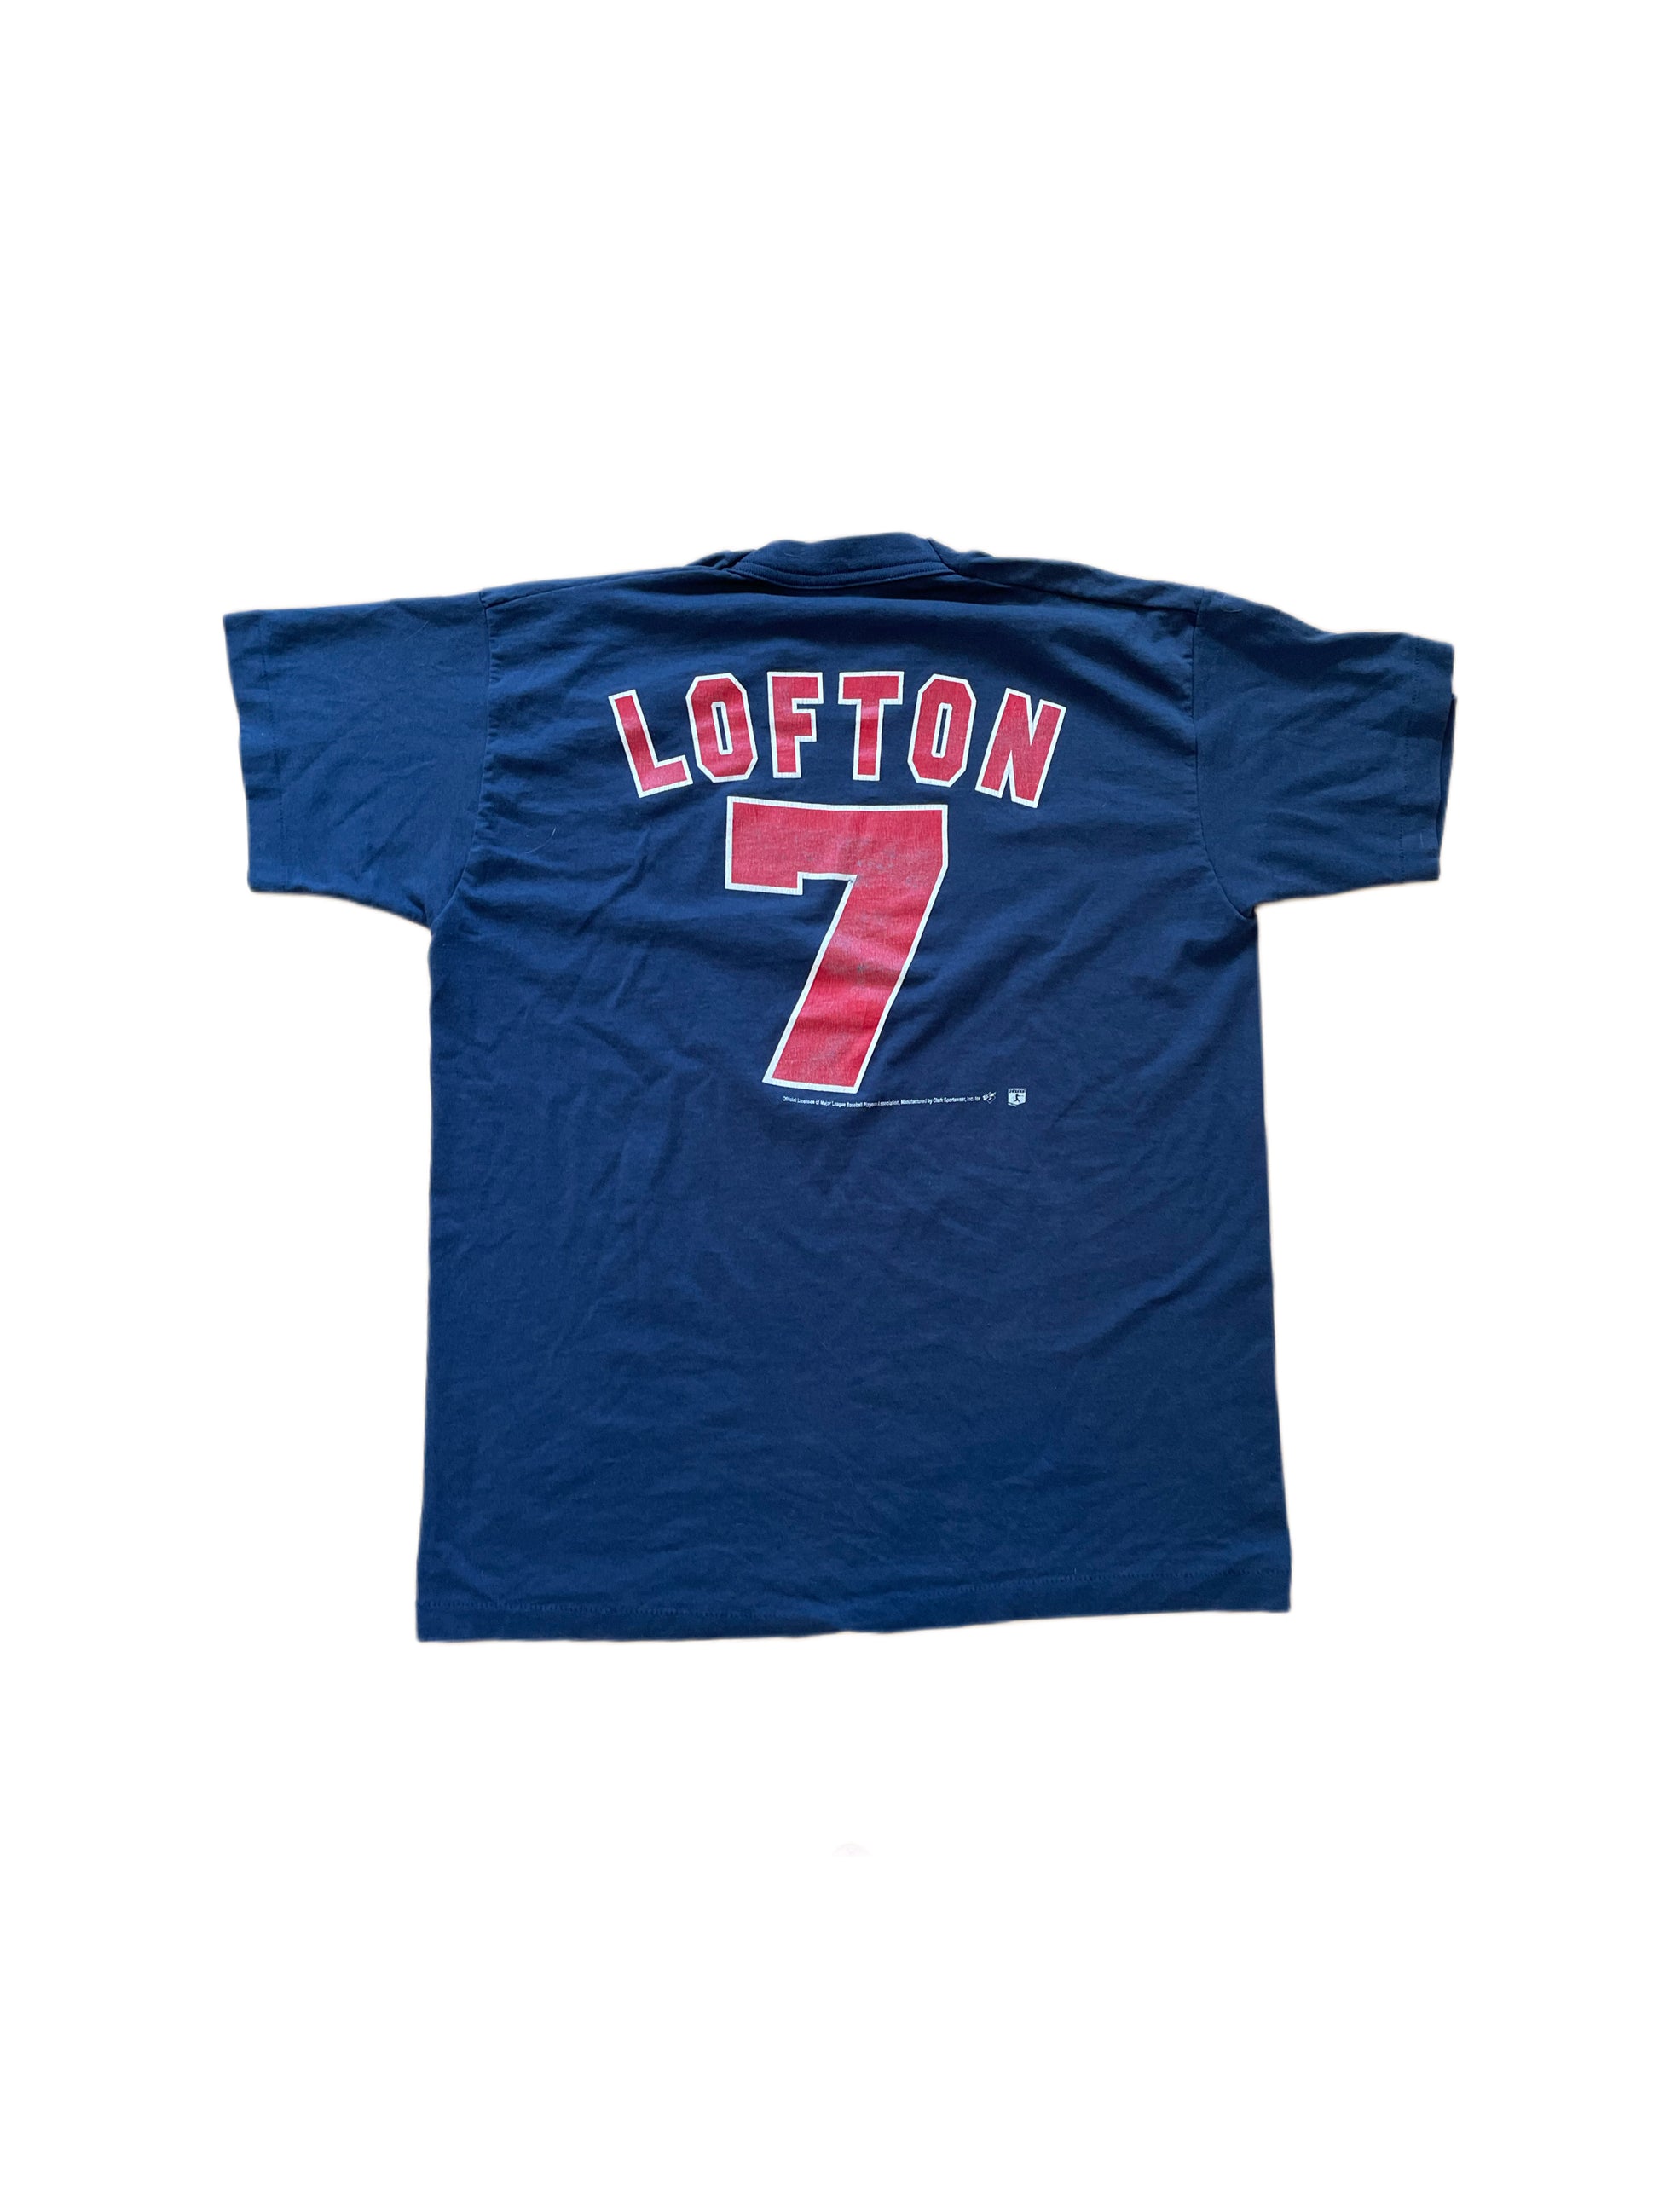 kenny lofton shirt